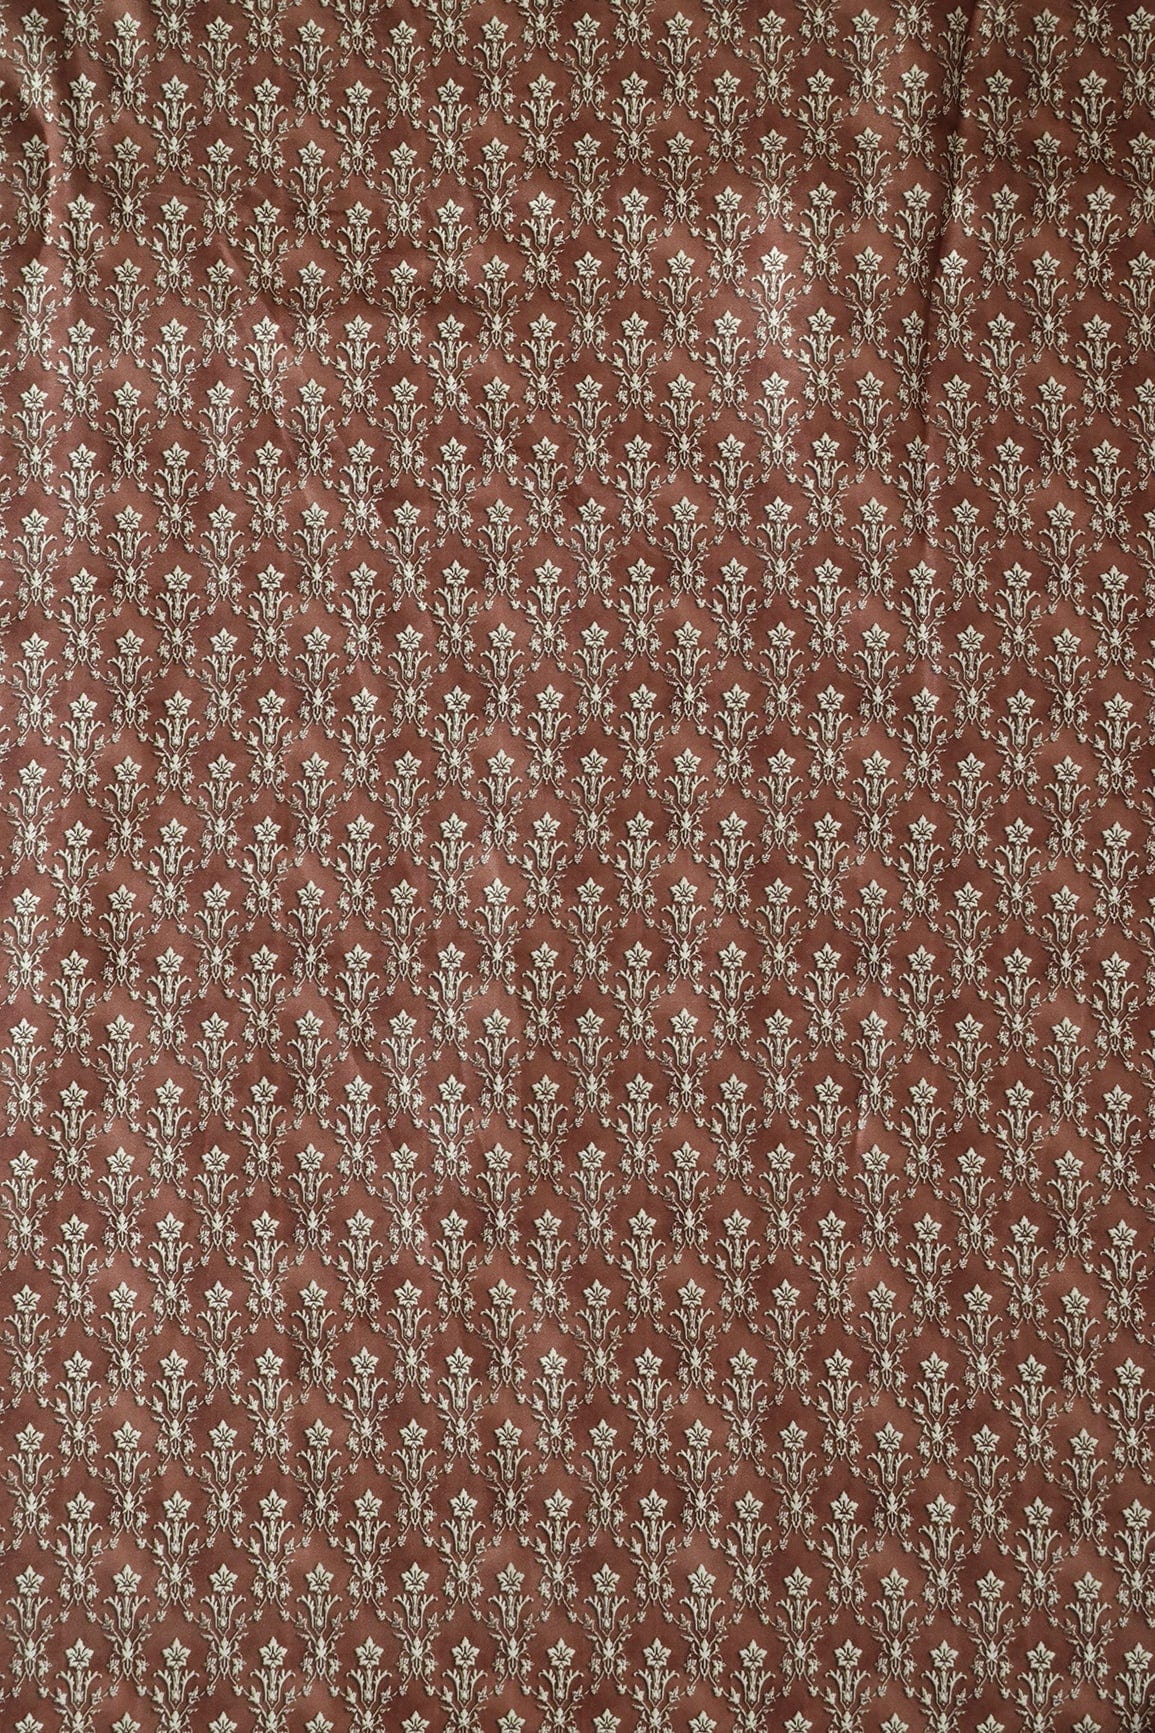 doeraa Prints Brown Ethnic Pattern Digital Print On Satin Fabric